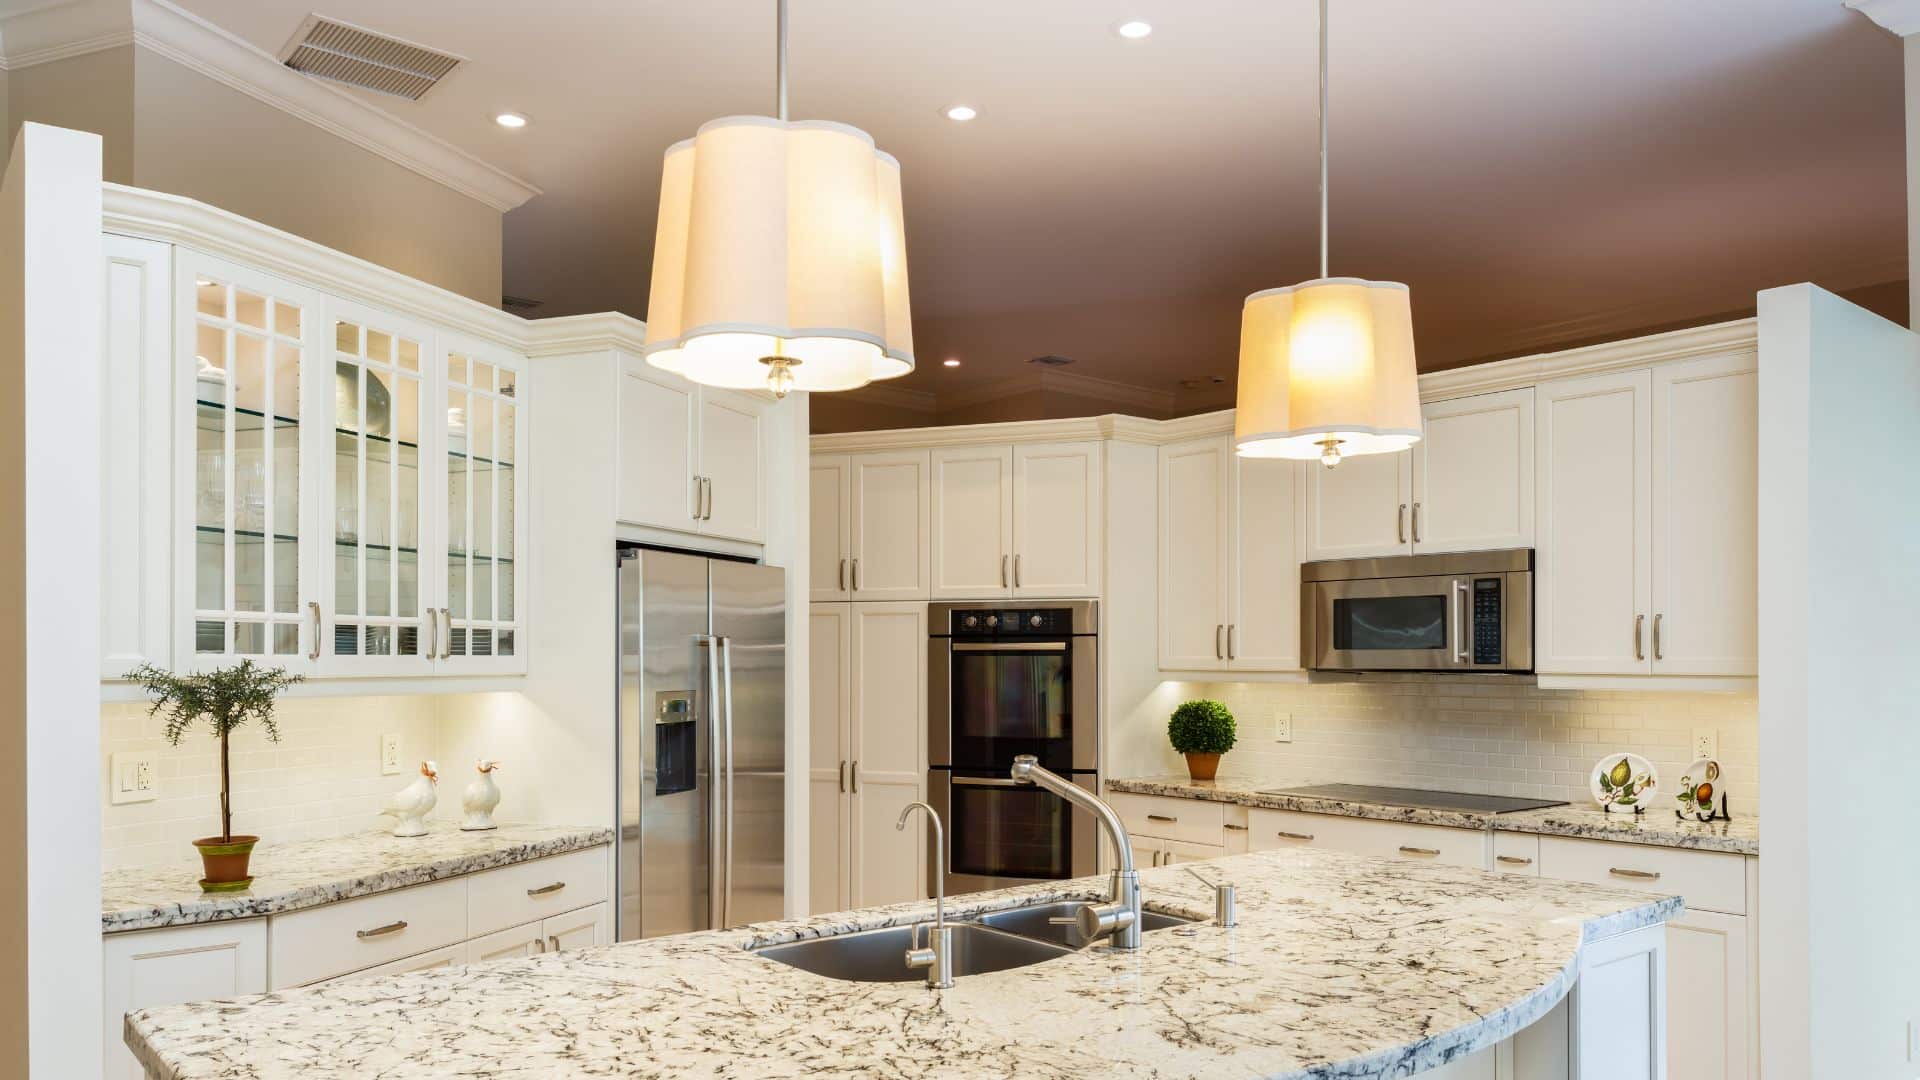 Elegant white kitchen with shaker cabinets